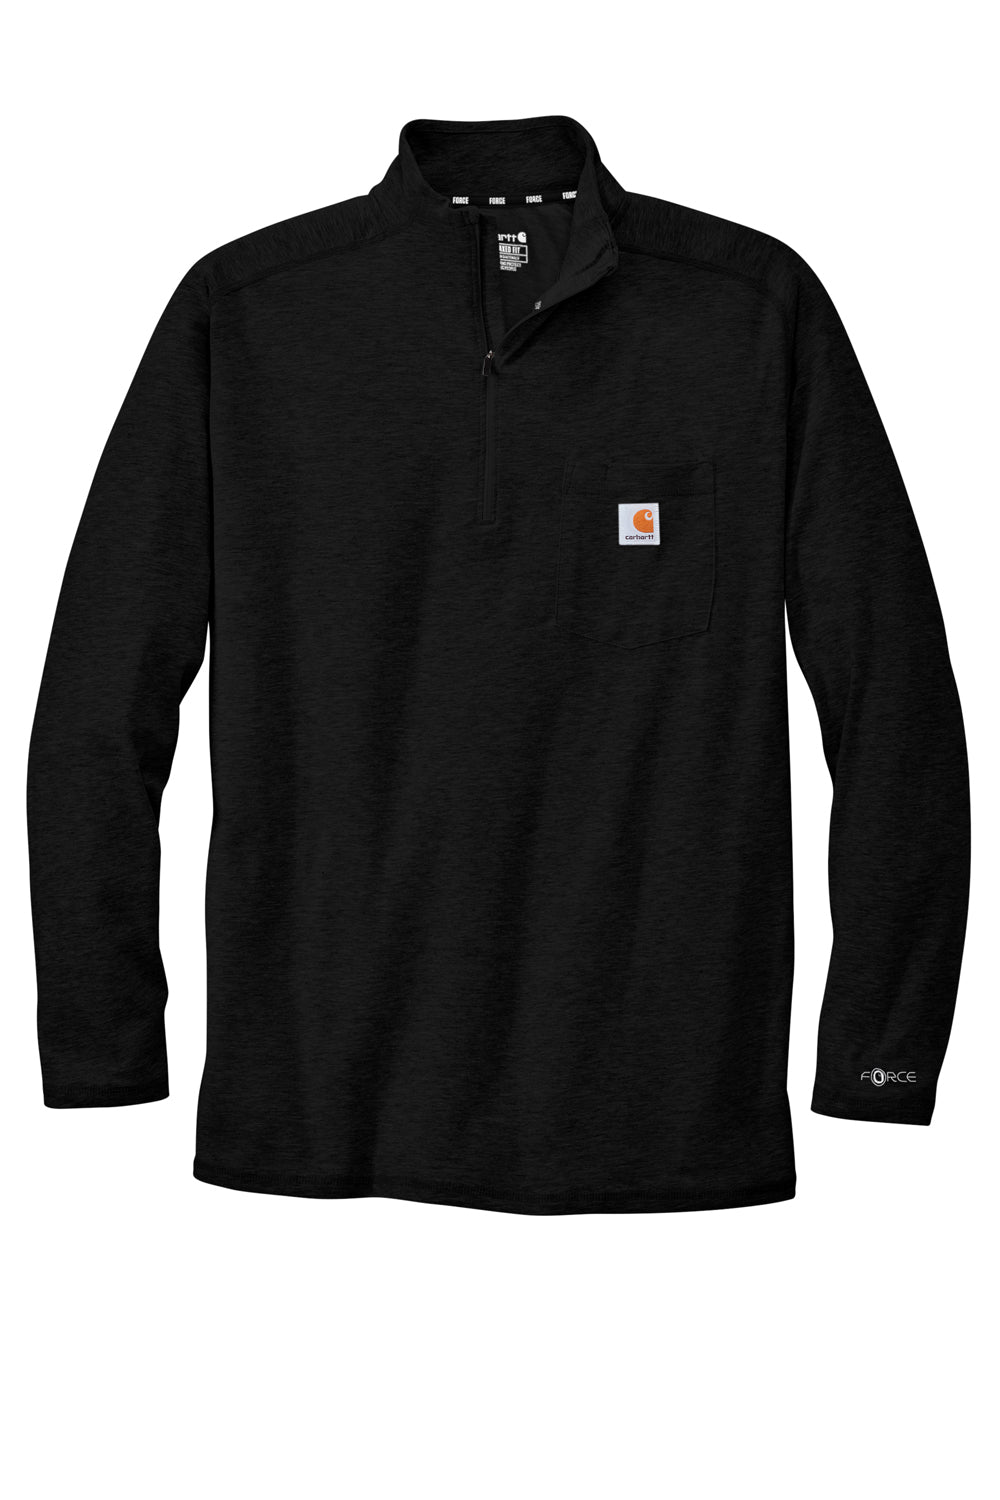 Carhartt CT104255 Mens Force Moisture Wicking 1/4 Zip Long Sleeve T-Shirt w/ Pocket Black Flat Front